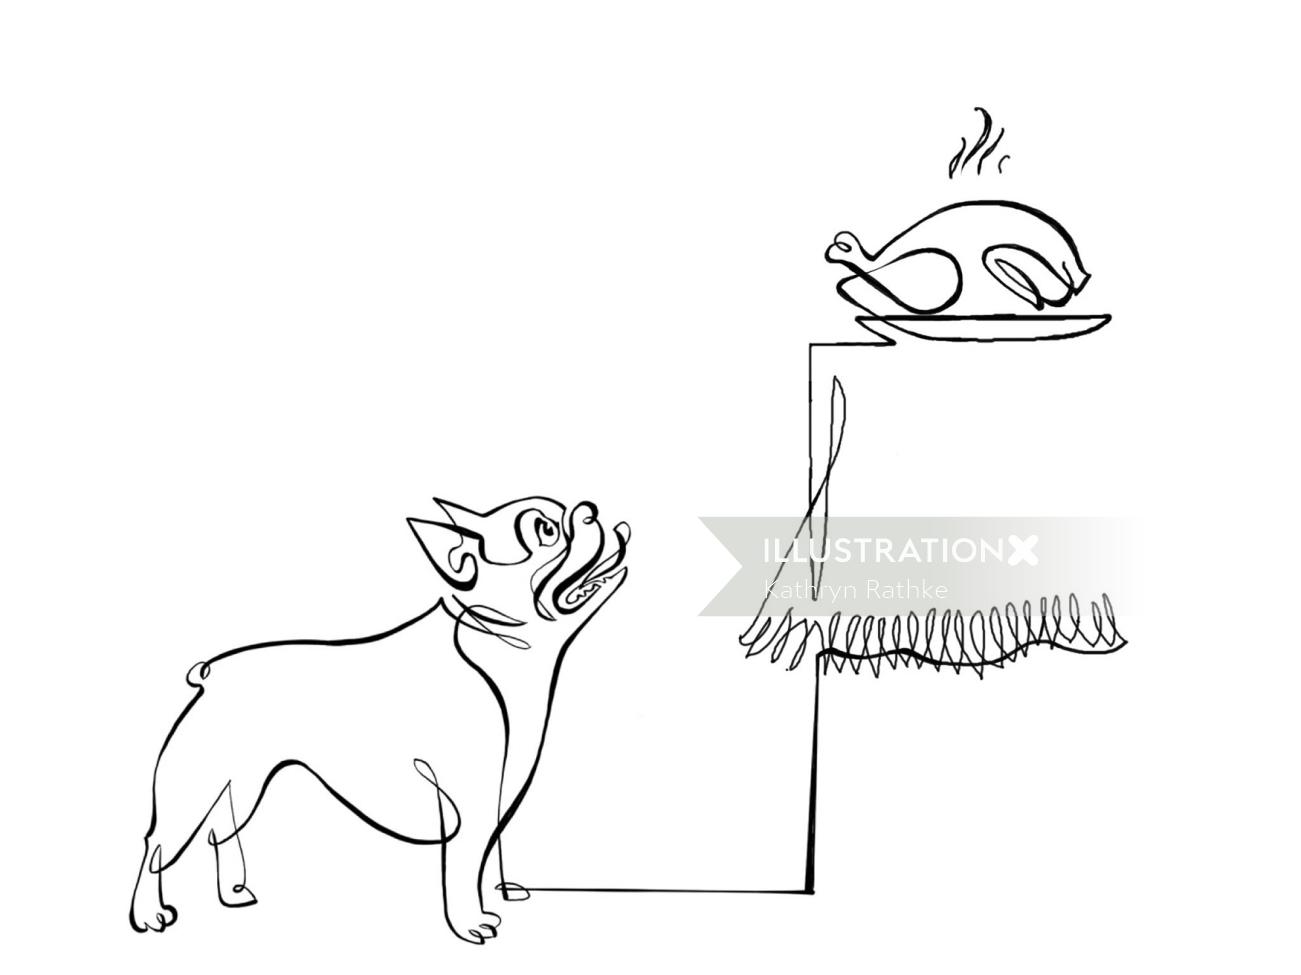 Gif 显示一只狗对着烤鸡流口水。